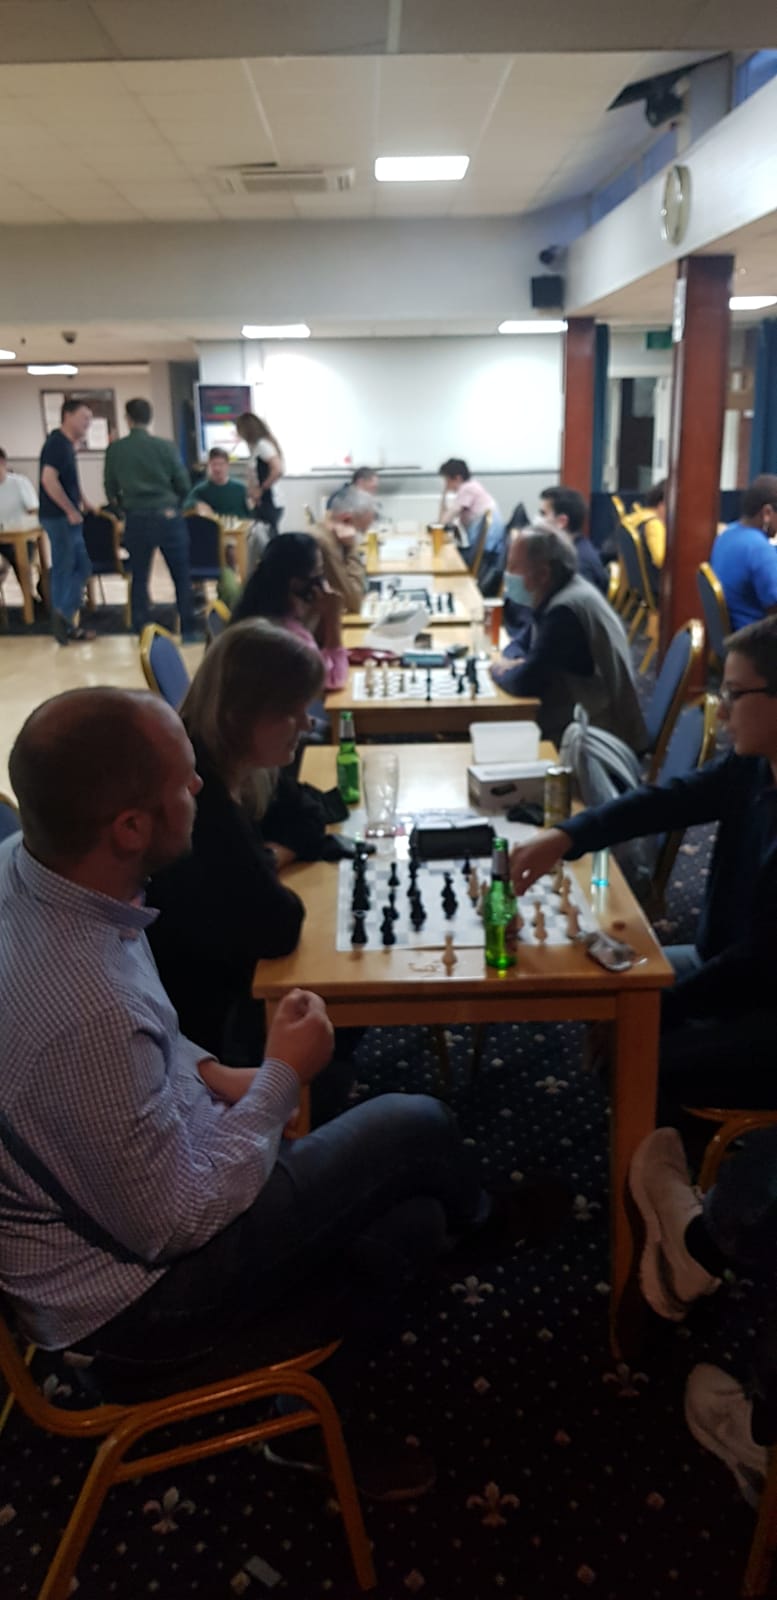 B C Chess Club - The people's champion, Mikhail Tal